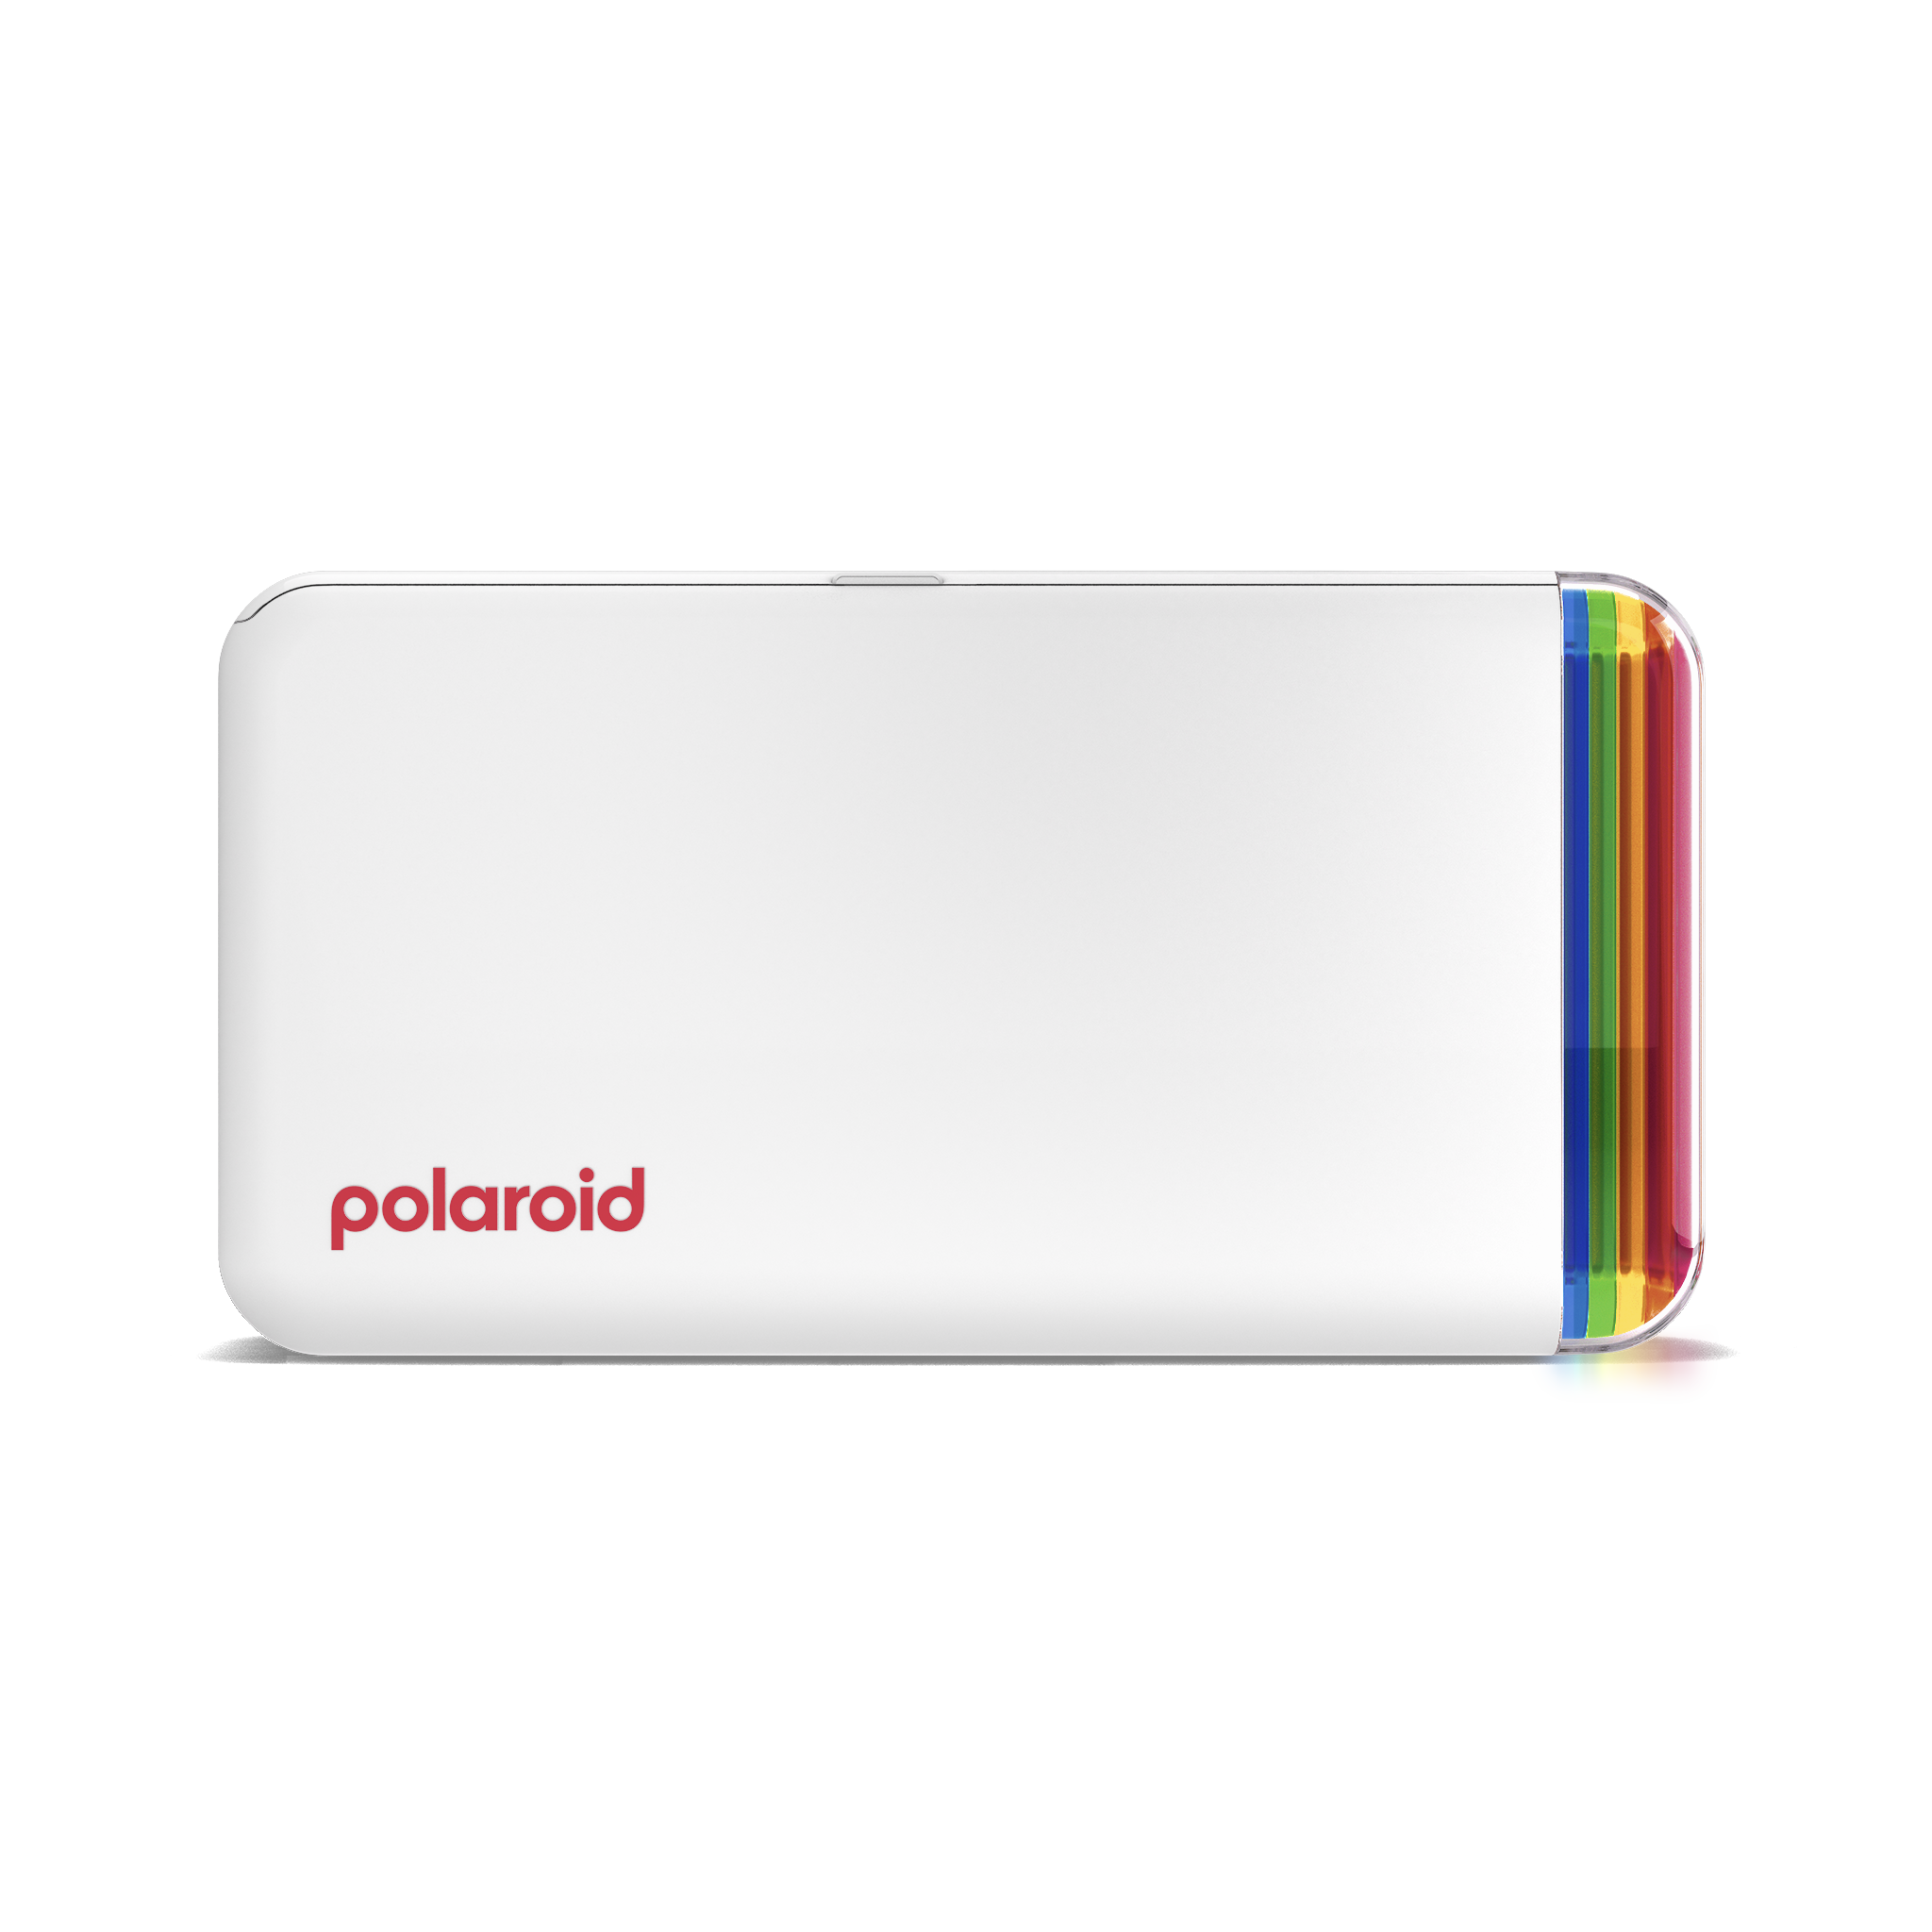 Polaroid Photo Printer Mobile Phone Bluetooth Portable Printer with 20  Sheets Hi Print 2x3 inch sticky Polaroid Photo Paper - AliExpress